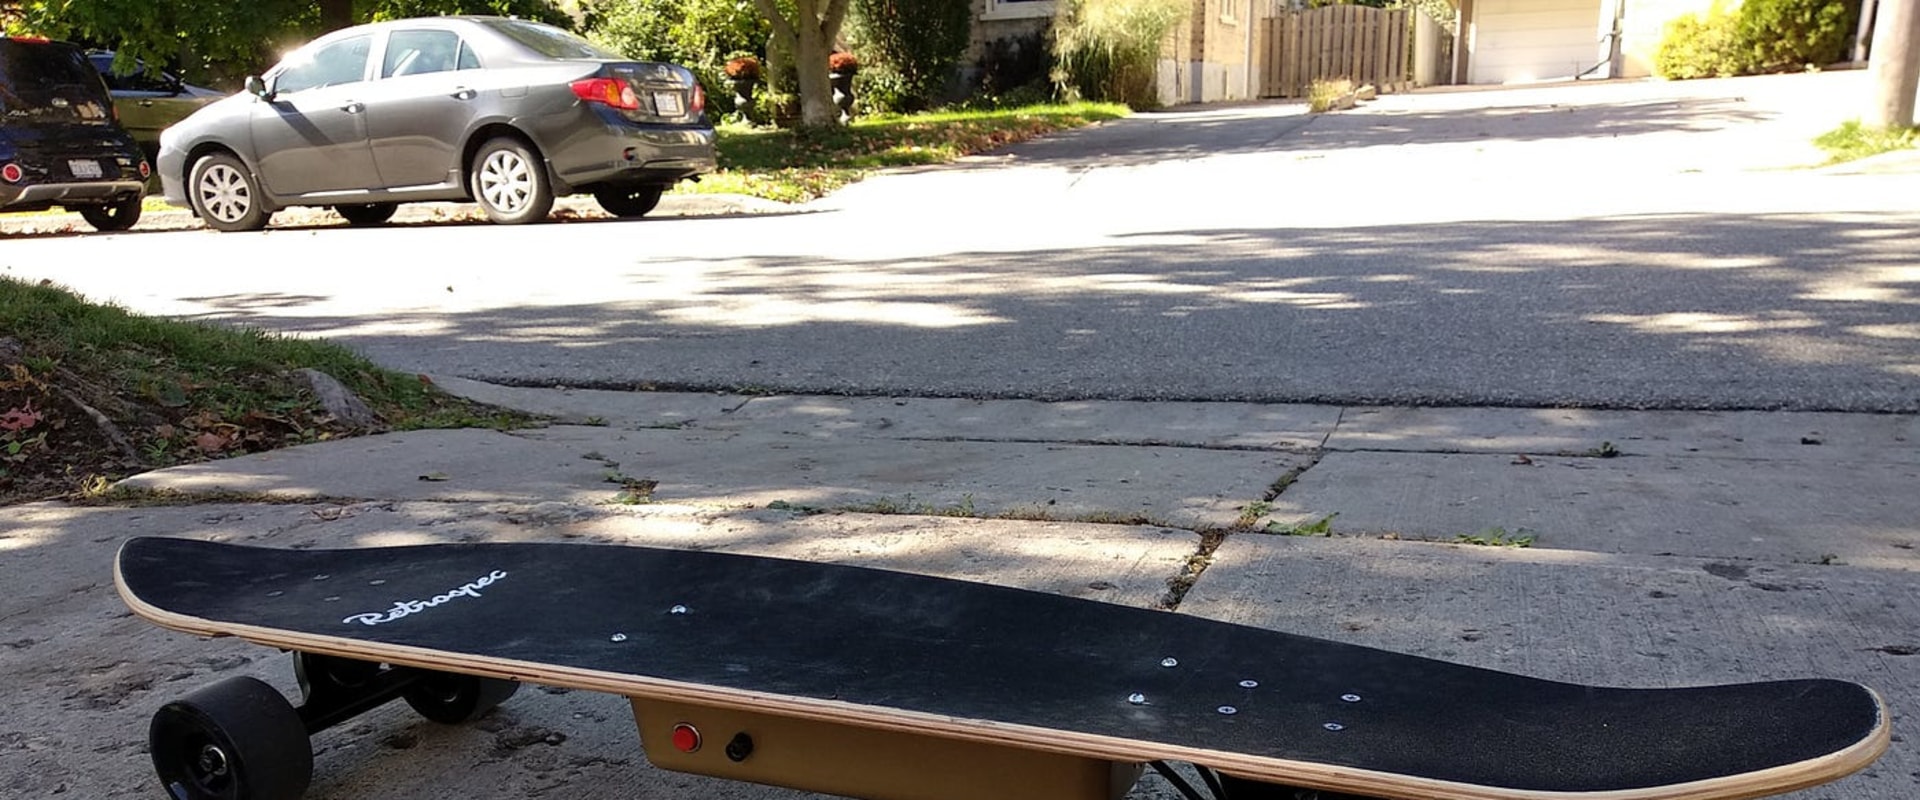 Tips for Proper Battery Maintenance of Electric Skateboards